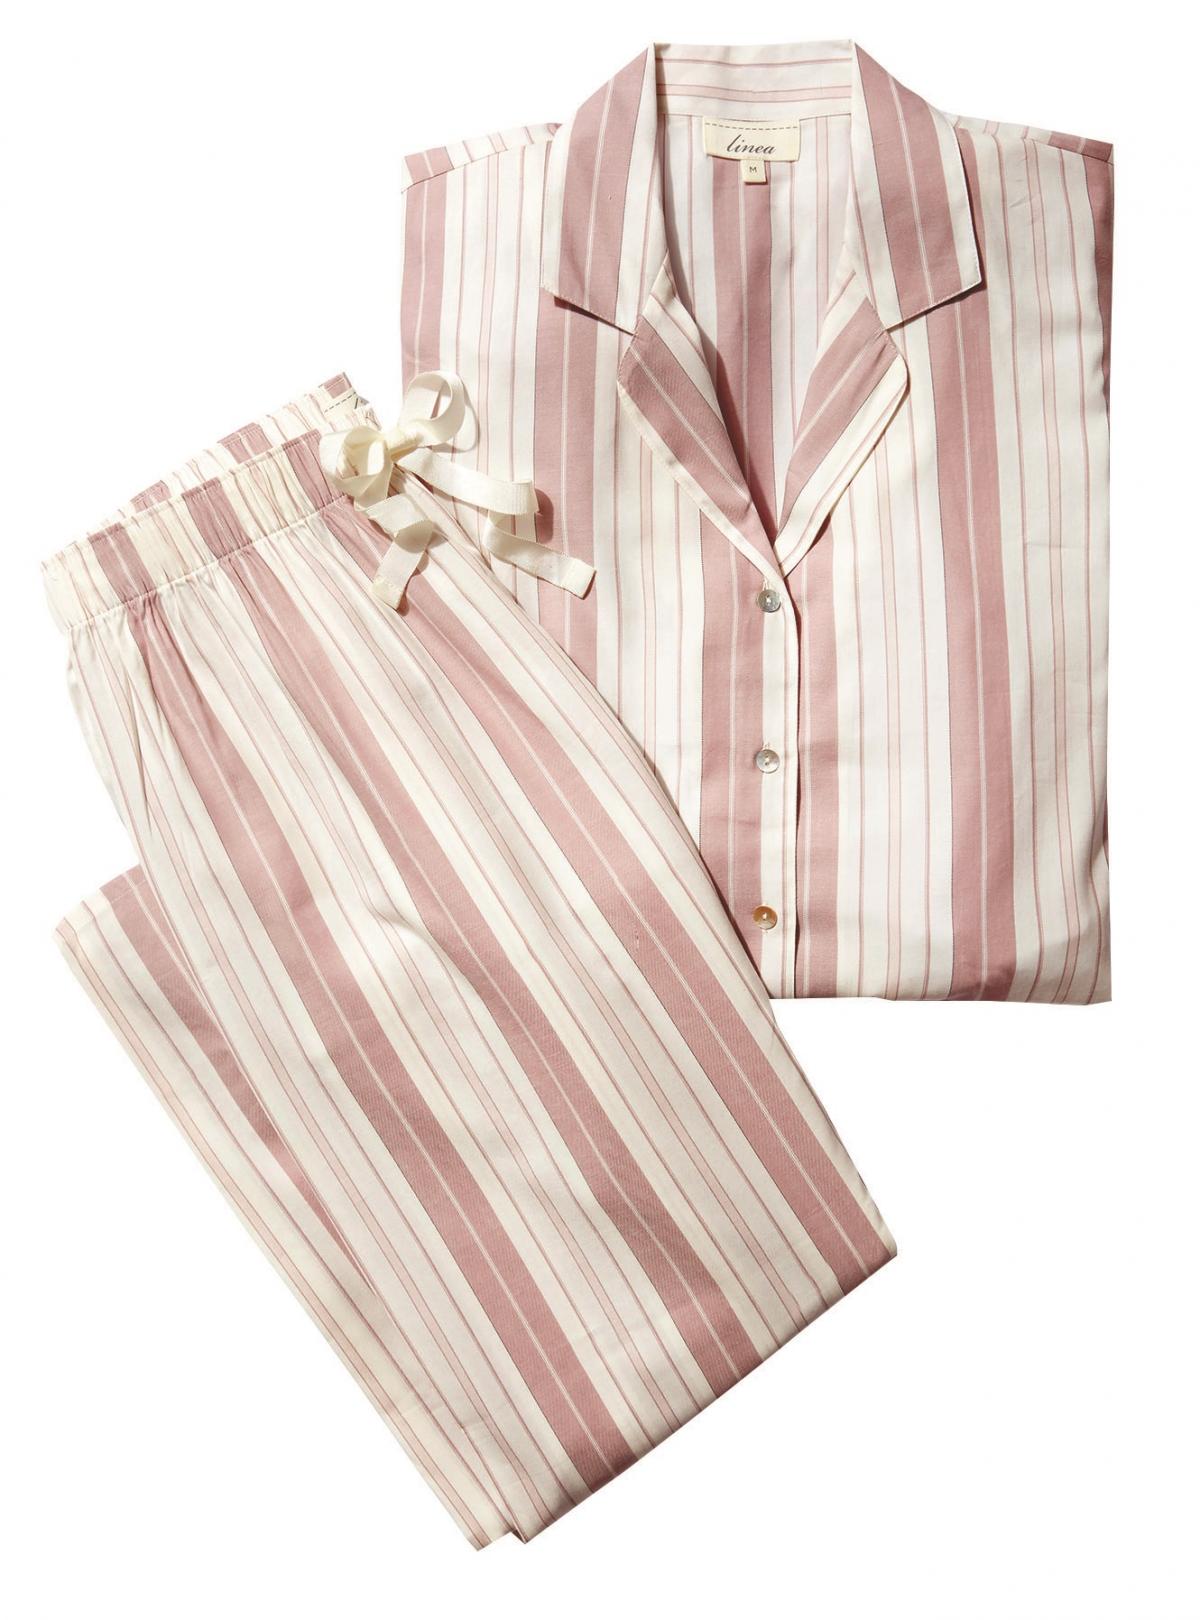 House of Fraser, Linea striped pyjama set, £45